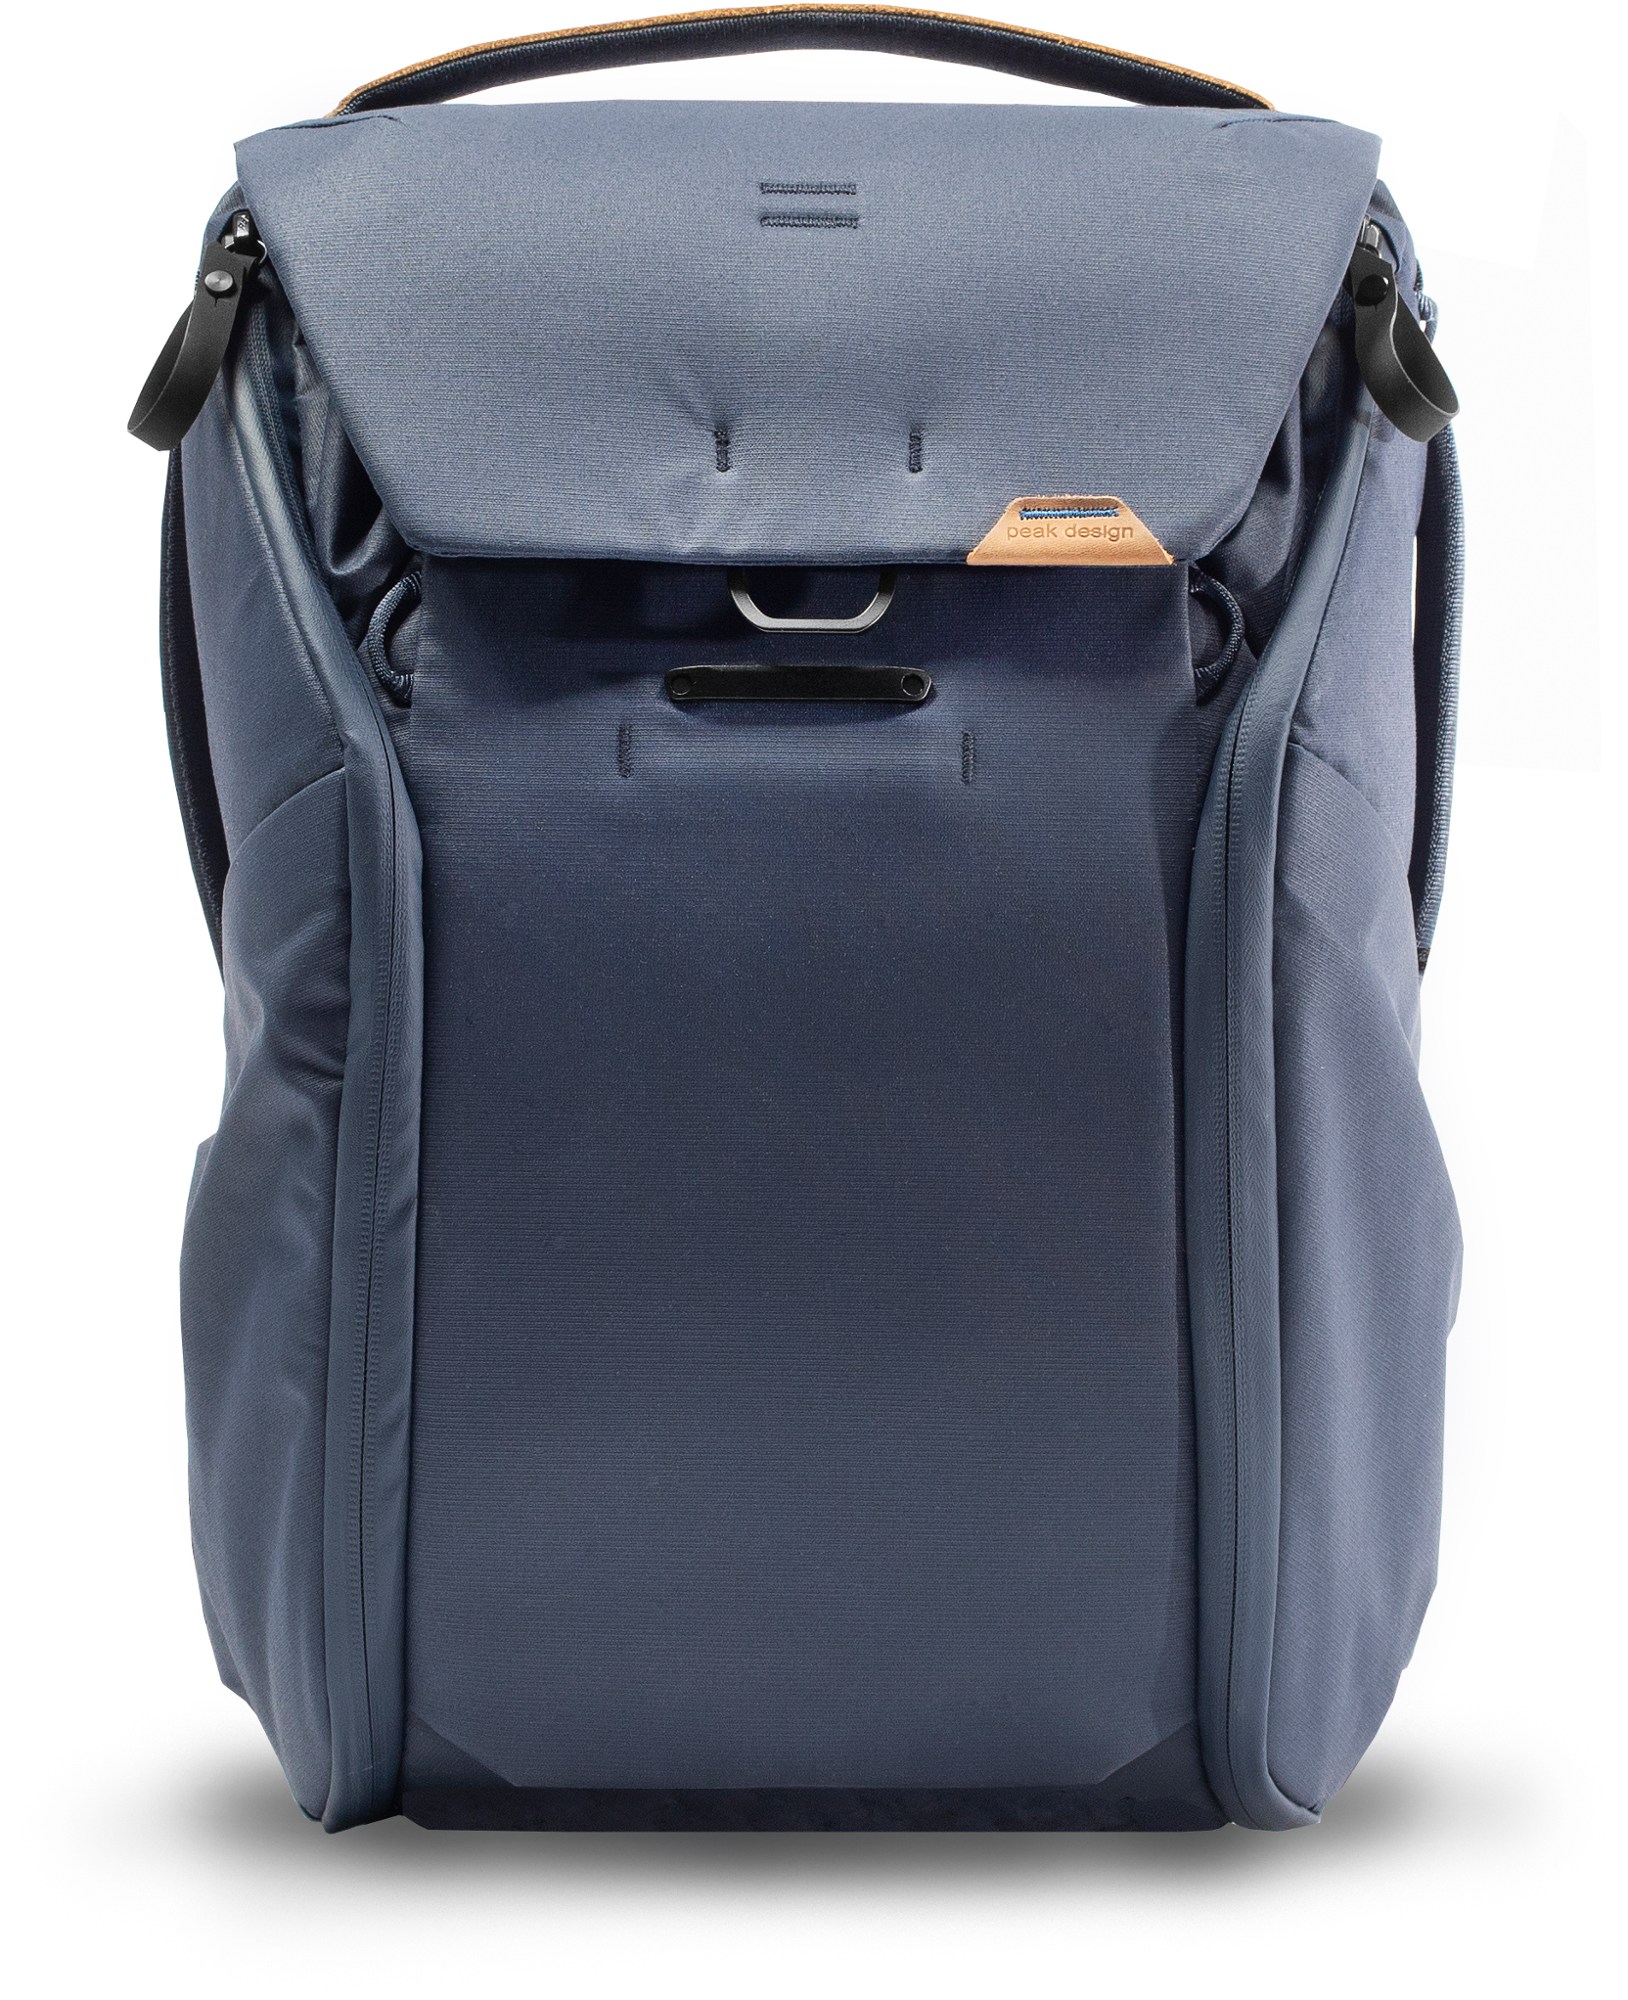 Рюкзак на каждый день V2 20л Peak Design, синий рюкзак peak design the everyday backpack 20l v2 0 midnight